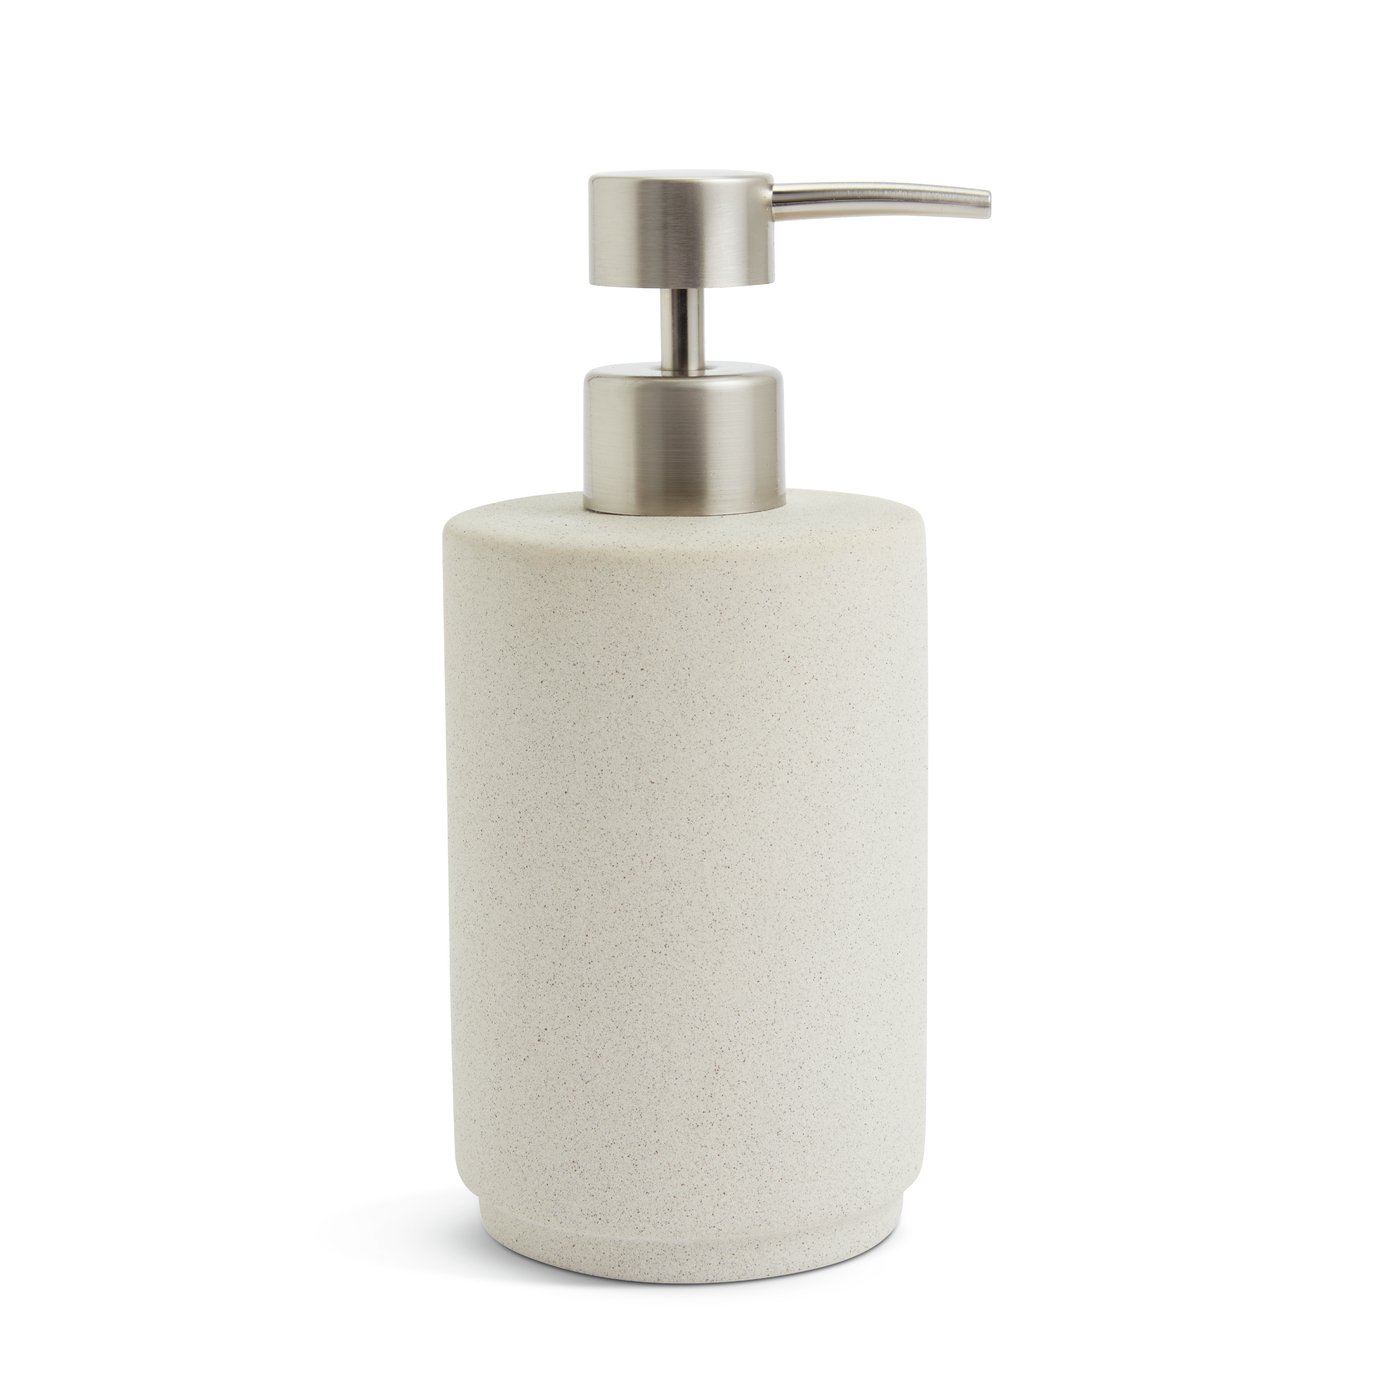 Habitat Sandstone Effect Ceramic Soap Dispenser - Natural